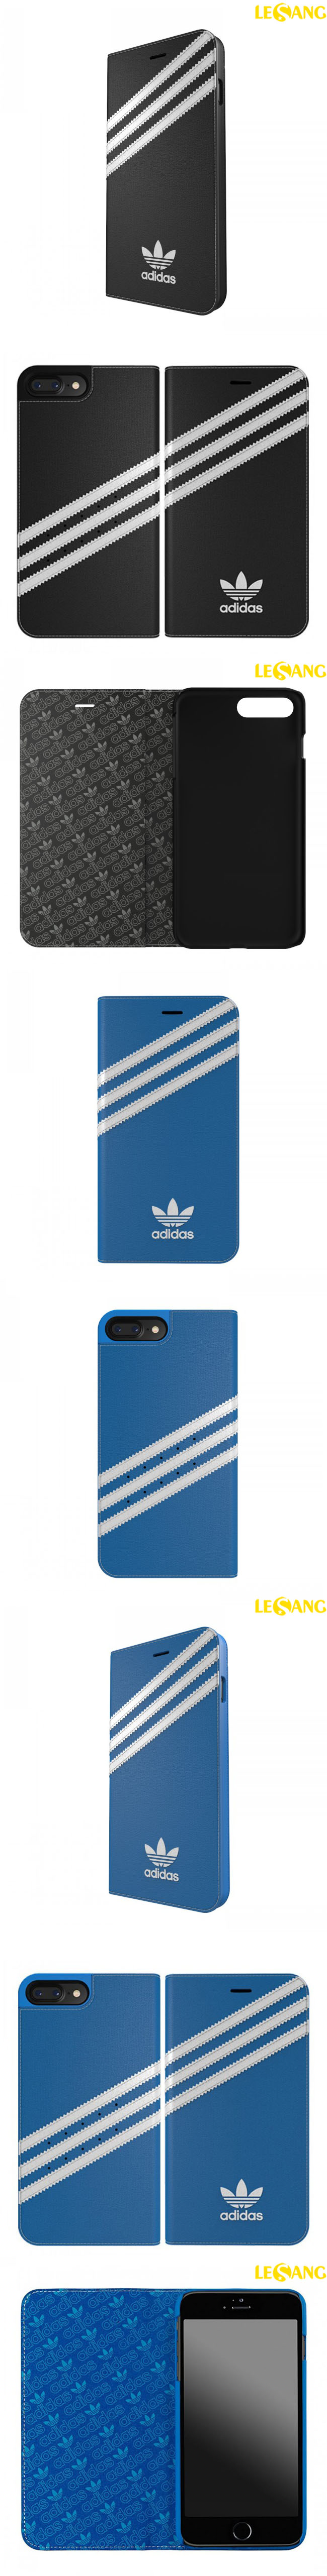 Bao da iphone 7 Plus Adidas Booklet Folio chính hãng 33